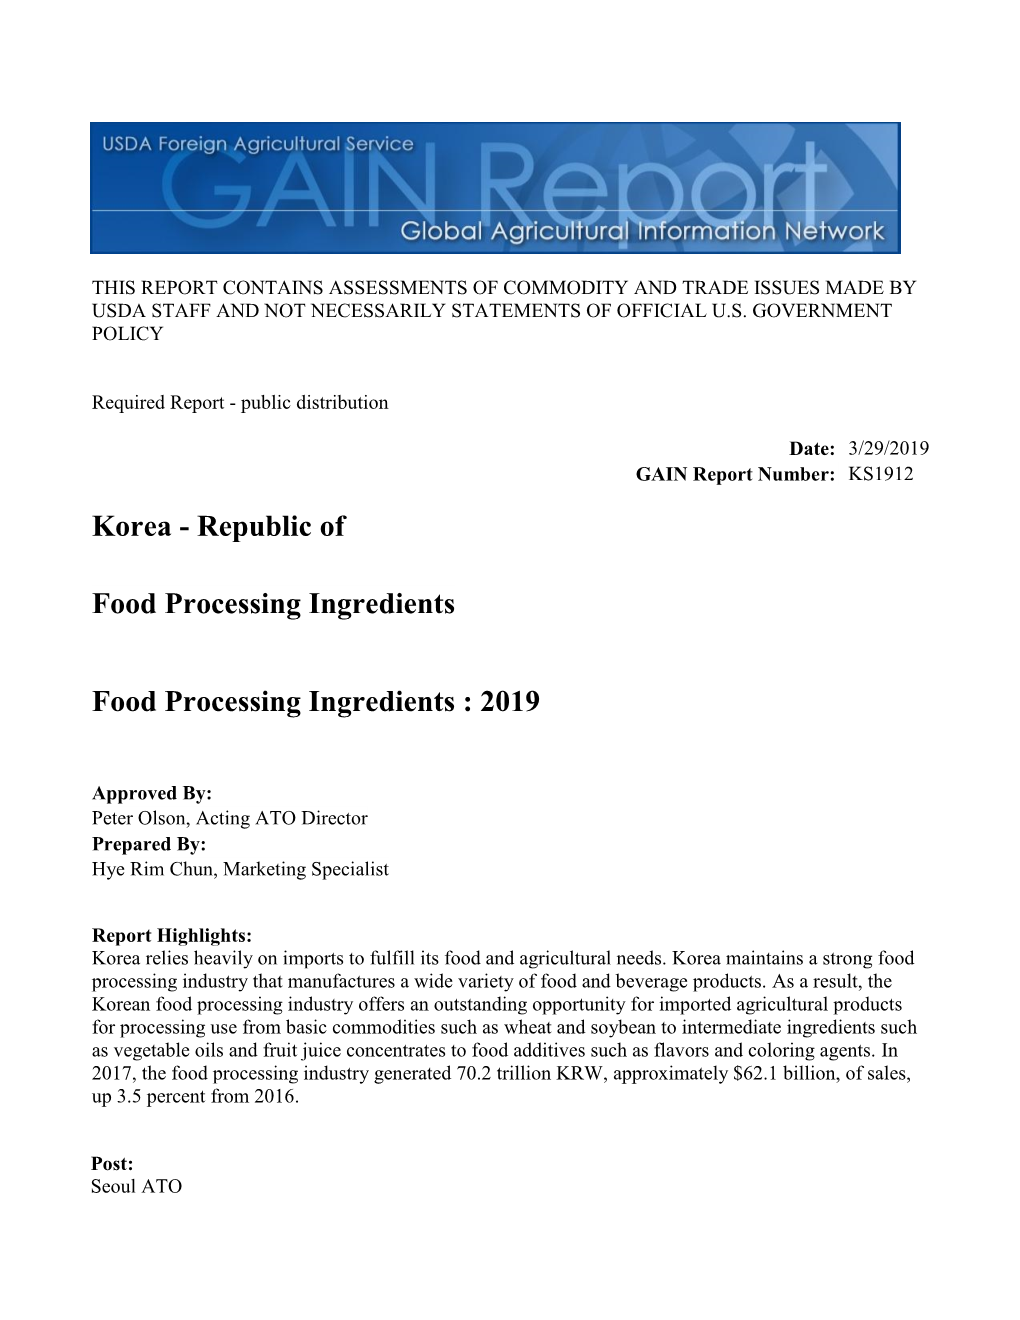 South Korea Food Processing Ingredients GAIN Report